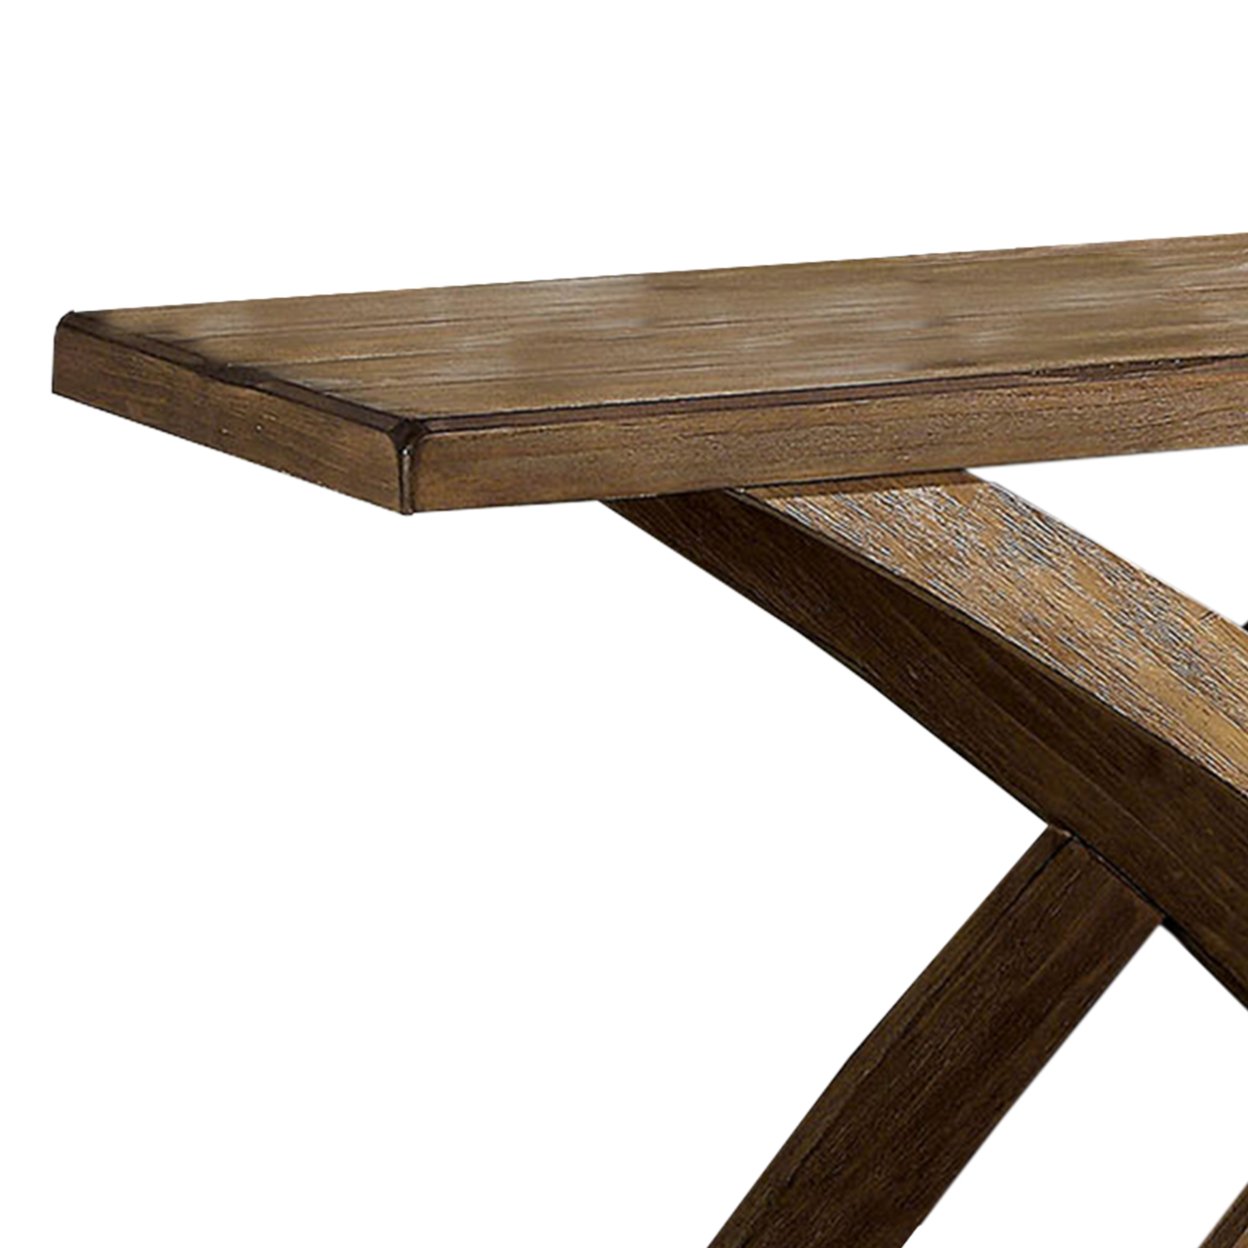 Wooden Sofa Table With Open Bottom Shelf And X Shaped Base, Antique Light Oak Brown- Saltoro Sherpi